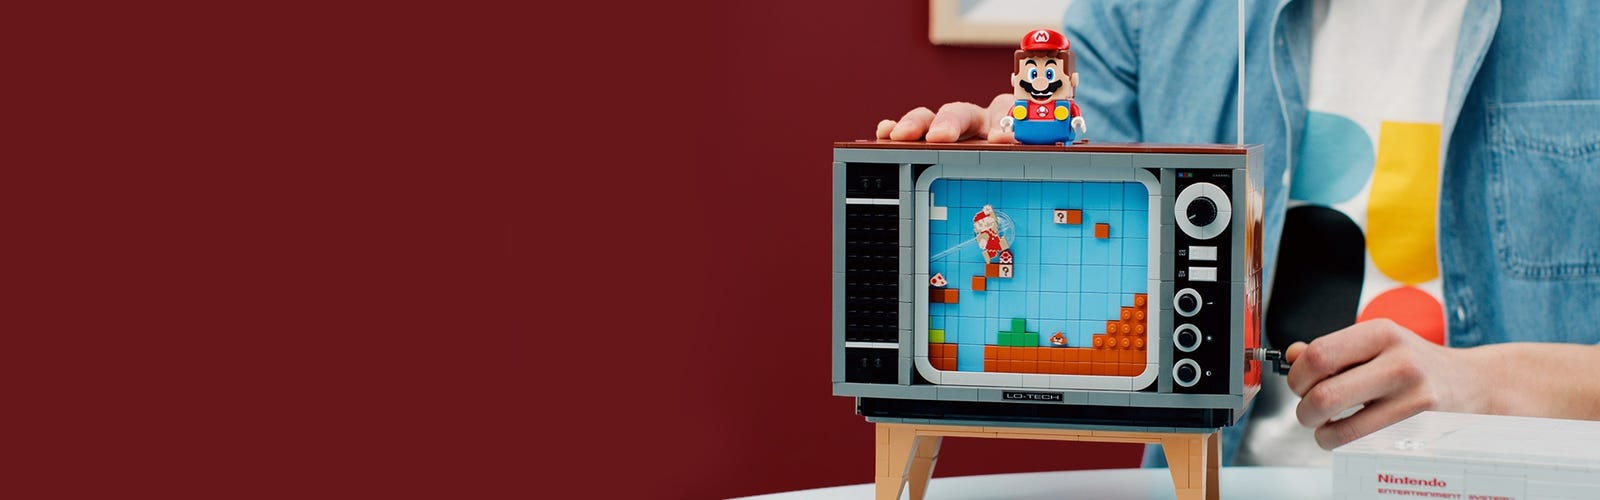 Lego NES sets - is Lego's new Nintendo kit still available